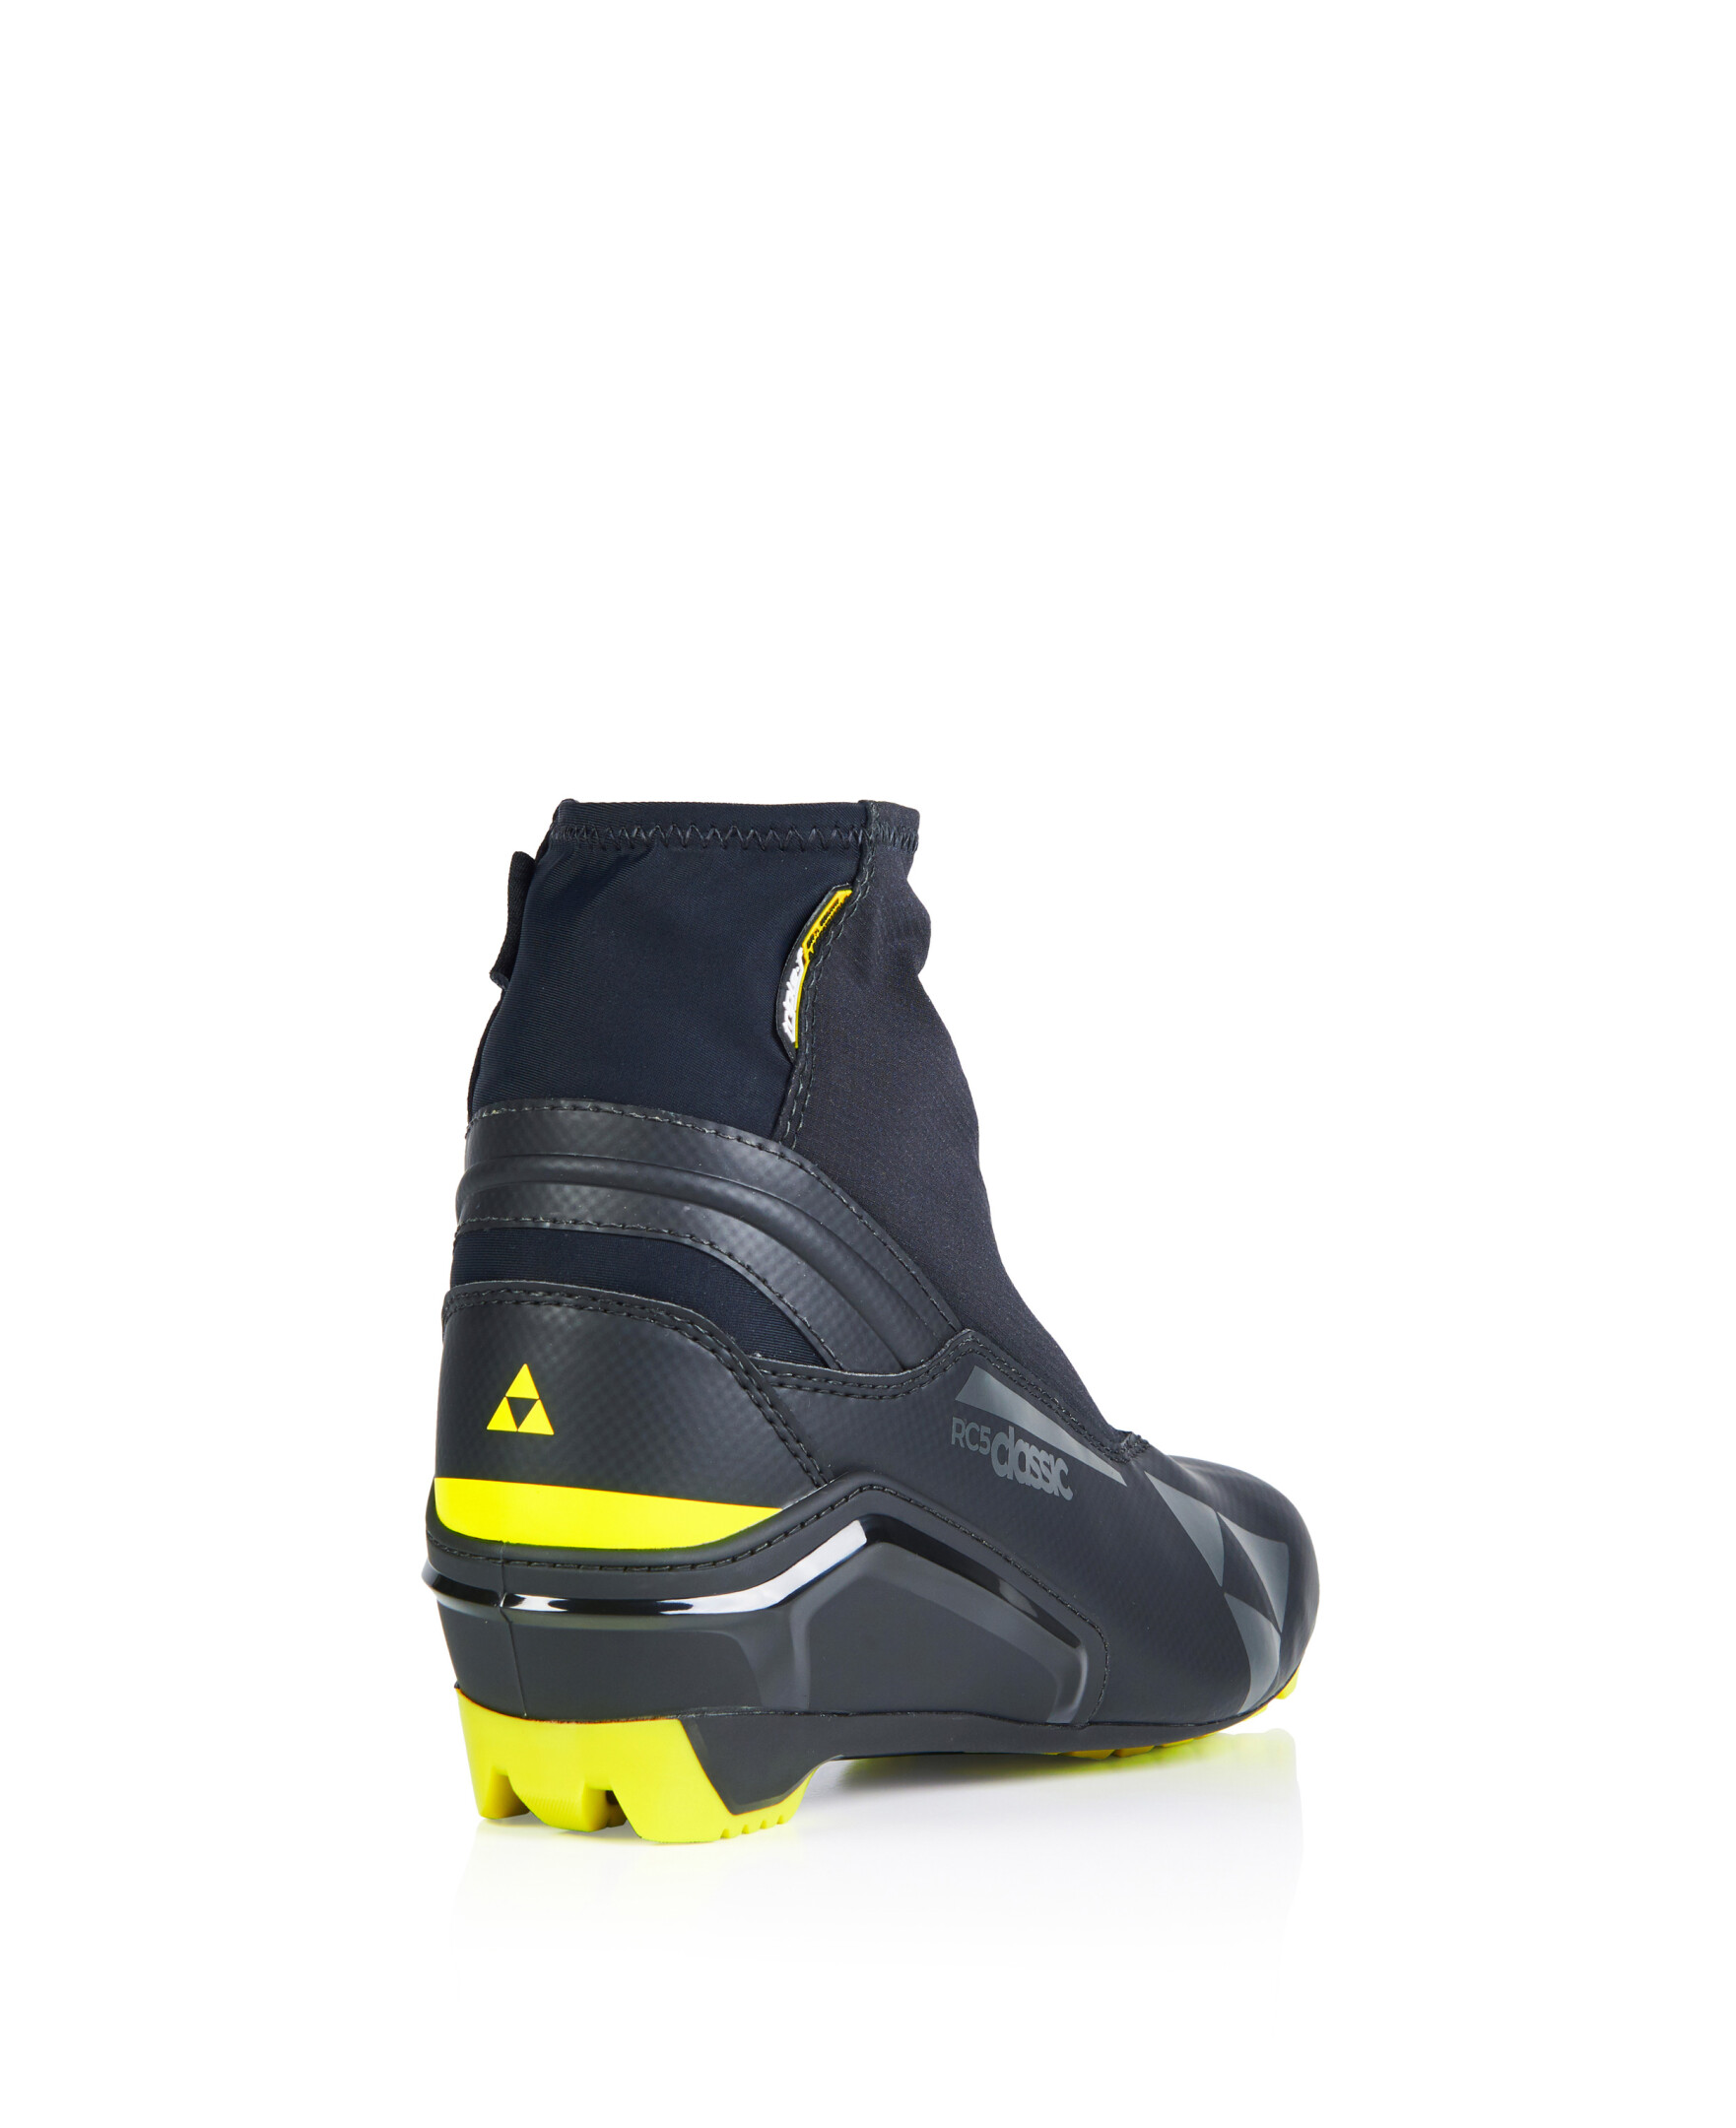 FISCHER Лыжные ботинки RC5 CLASSIC Артикул: S17021